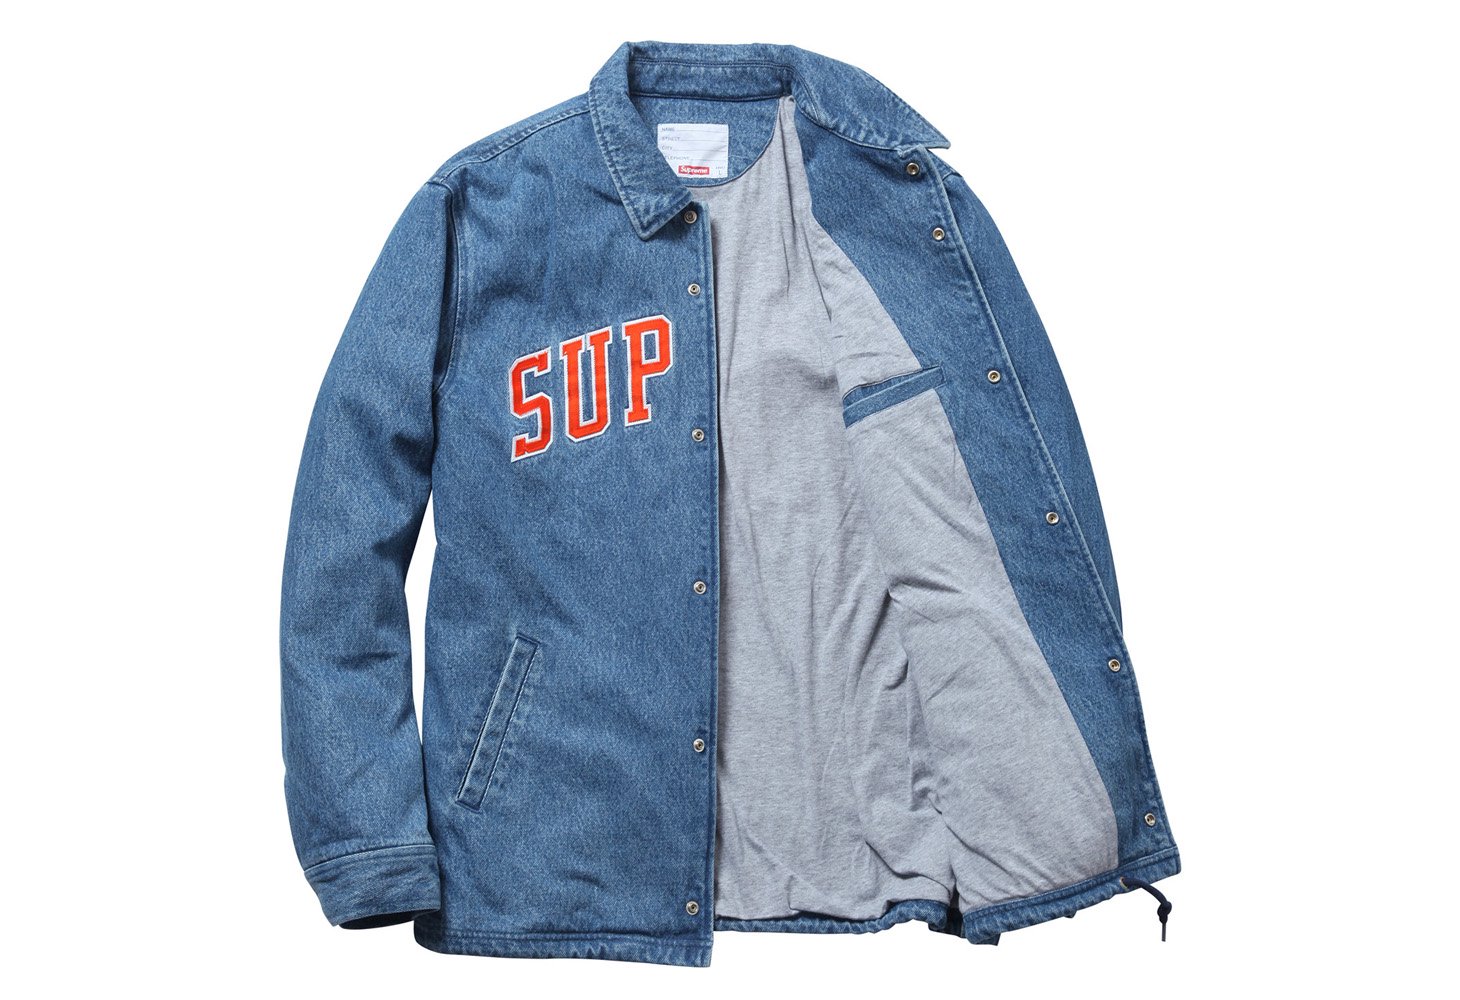 SALE美品 Supreme 13AW Denim Coaches jacket 黒 M